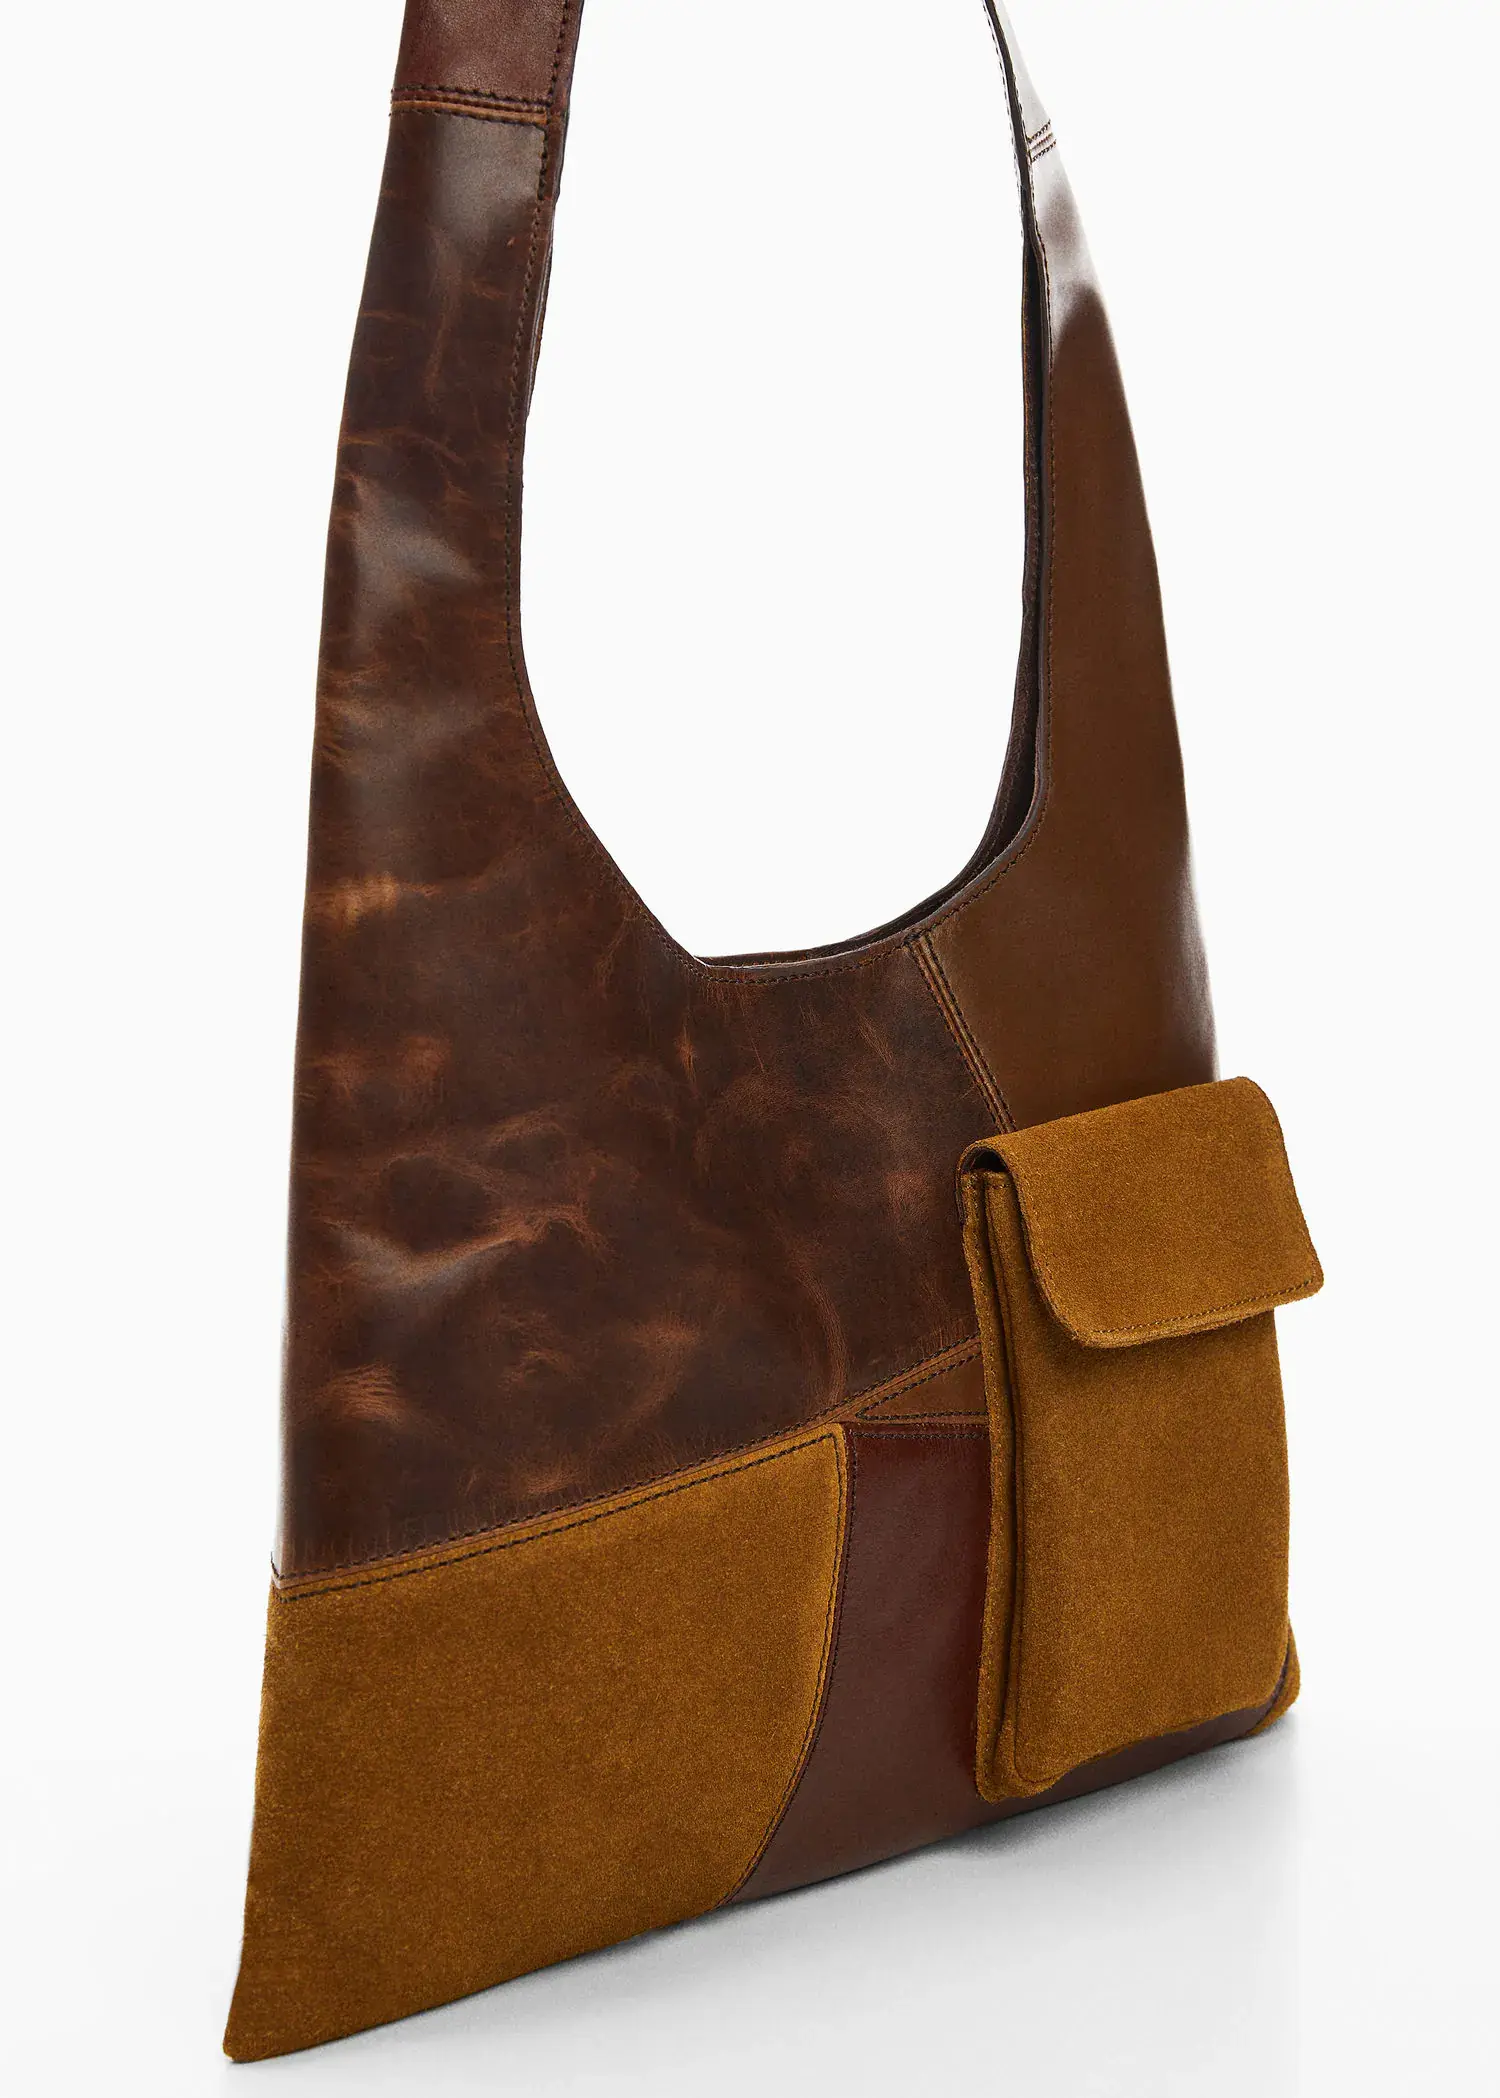 Mango Patchwork leather bag. 2